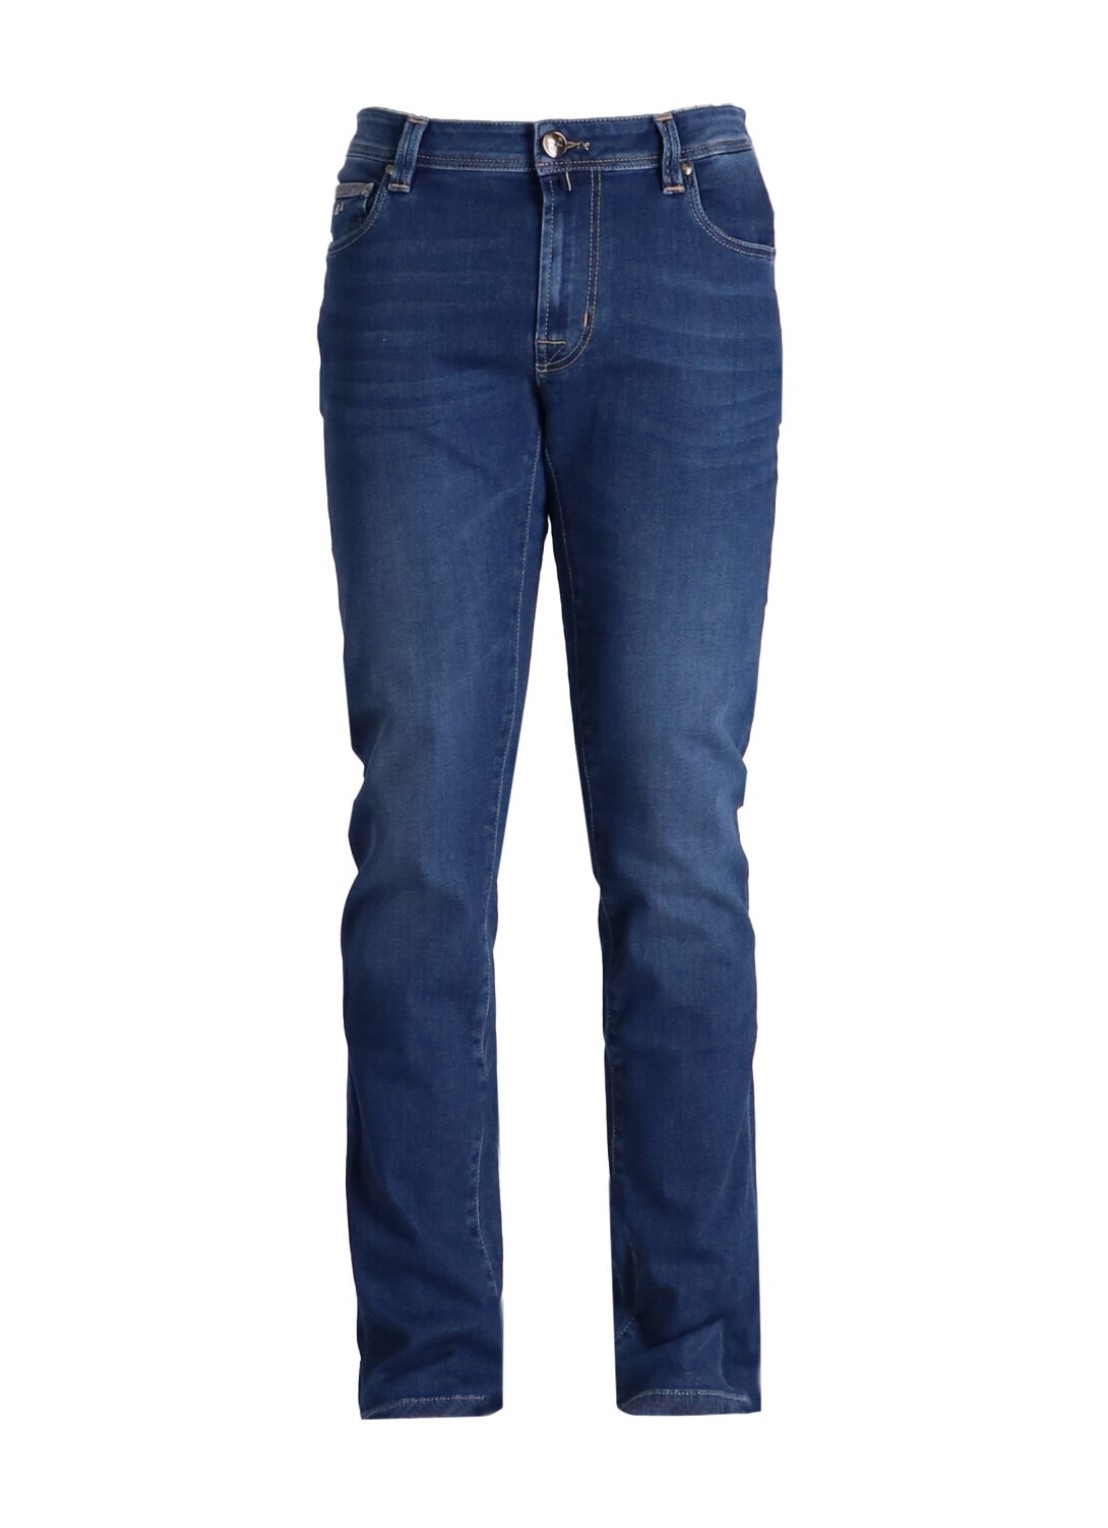 Pantalon jeans tramarossa denim man leonardo zip stre leonardo zip stre 23i12 talla 33
 